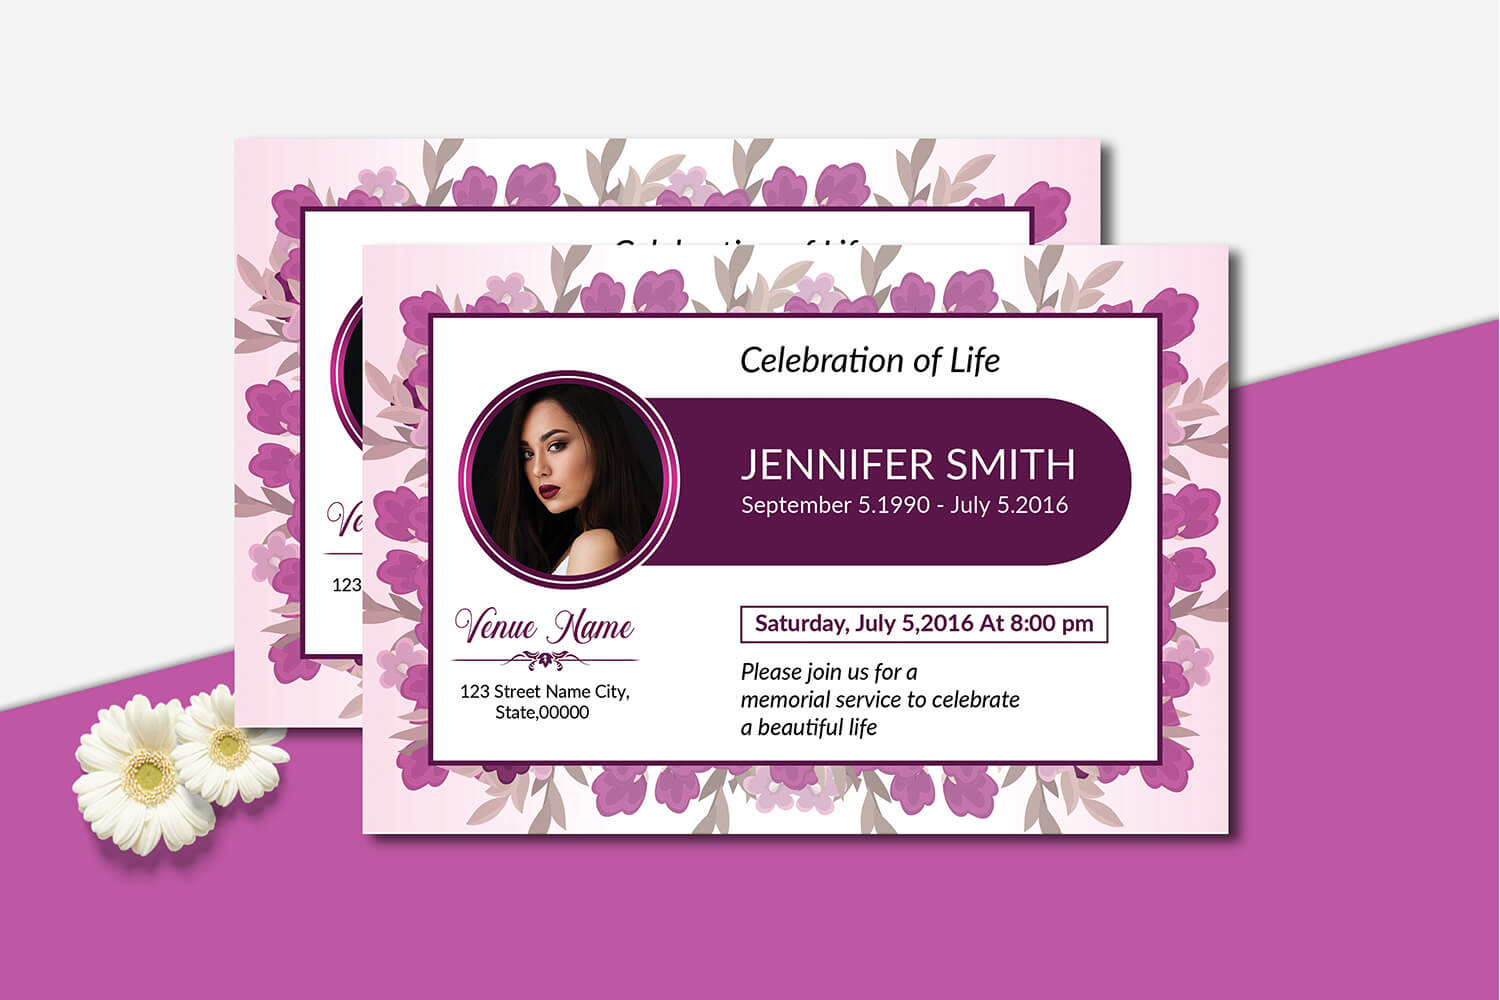 Funeral Announcement / Invitation Card Template Pertaining To Funeral Invitation Card Template